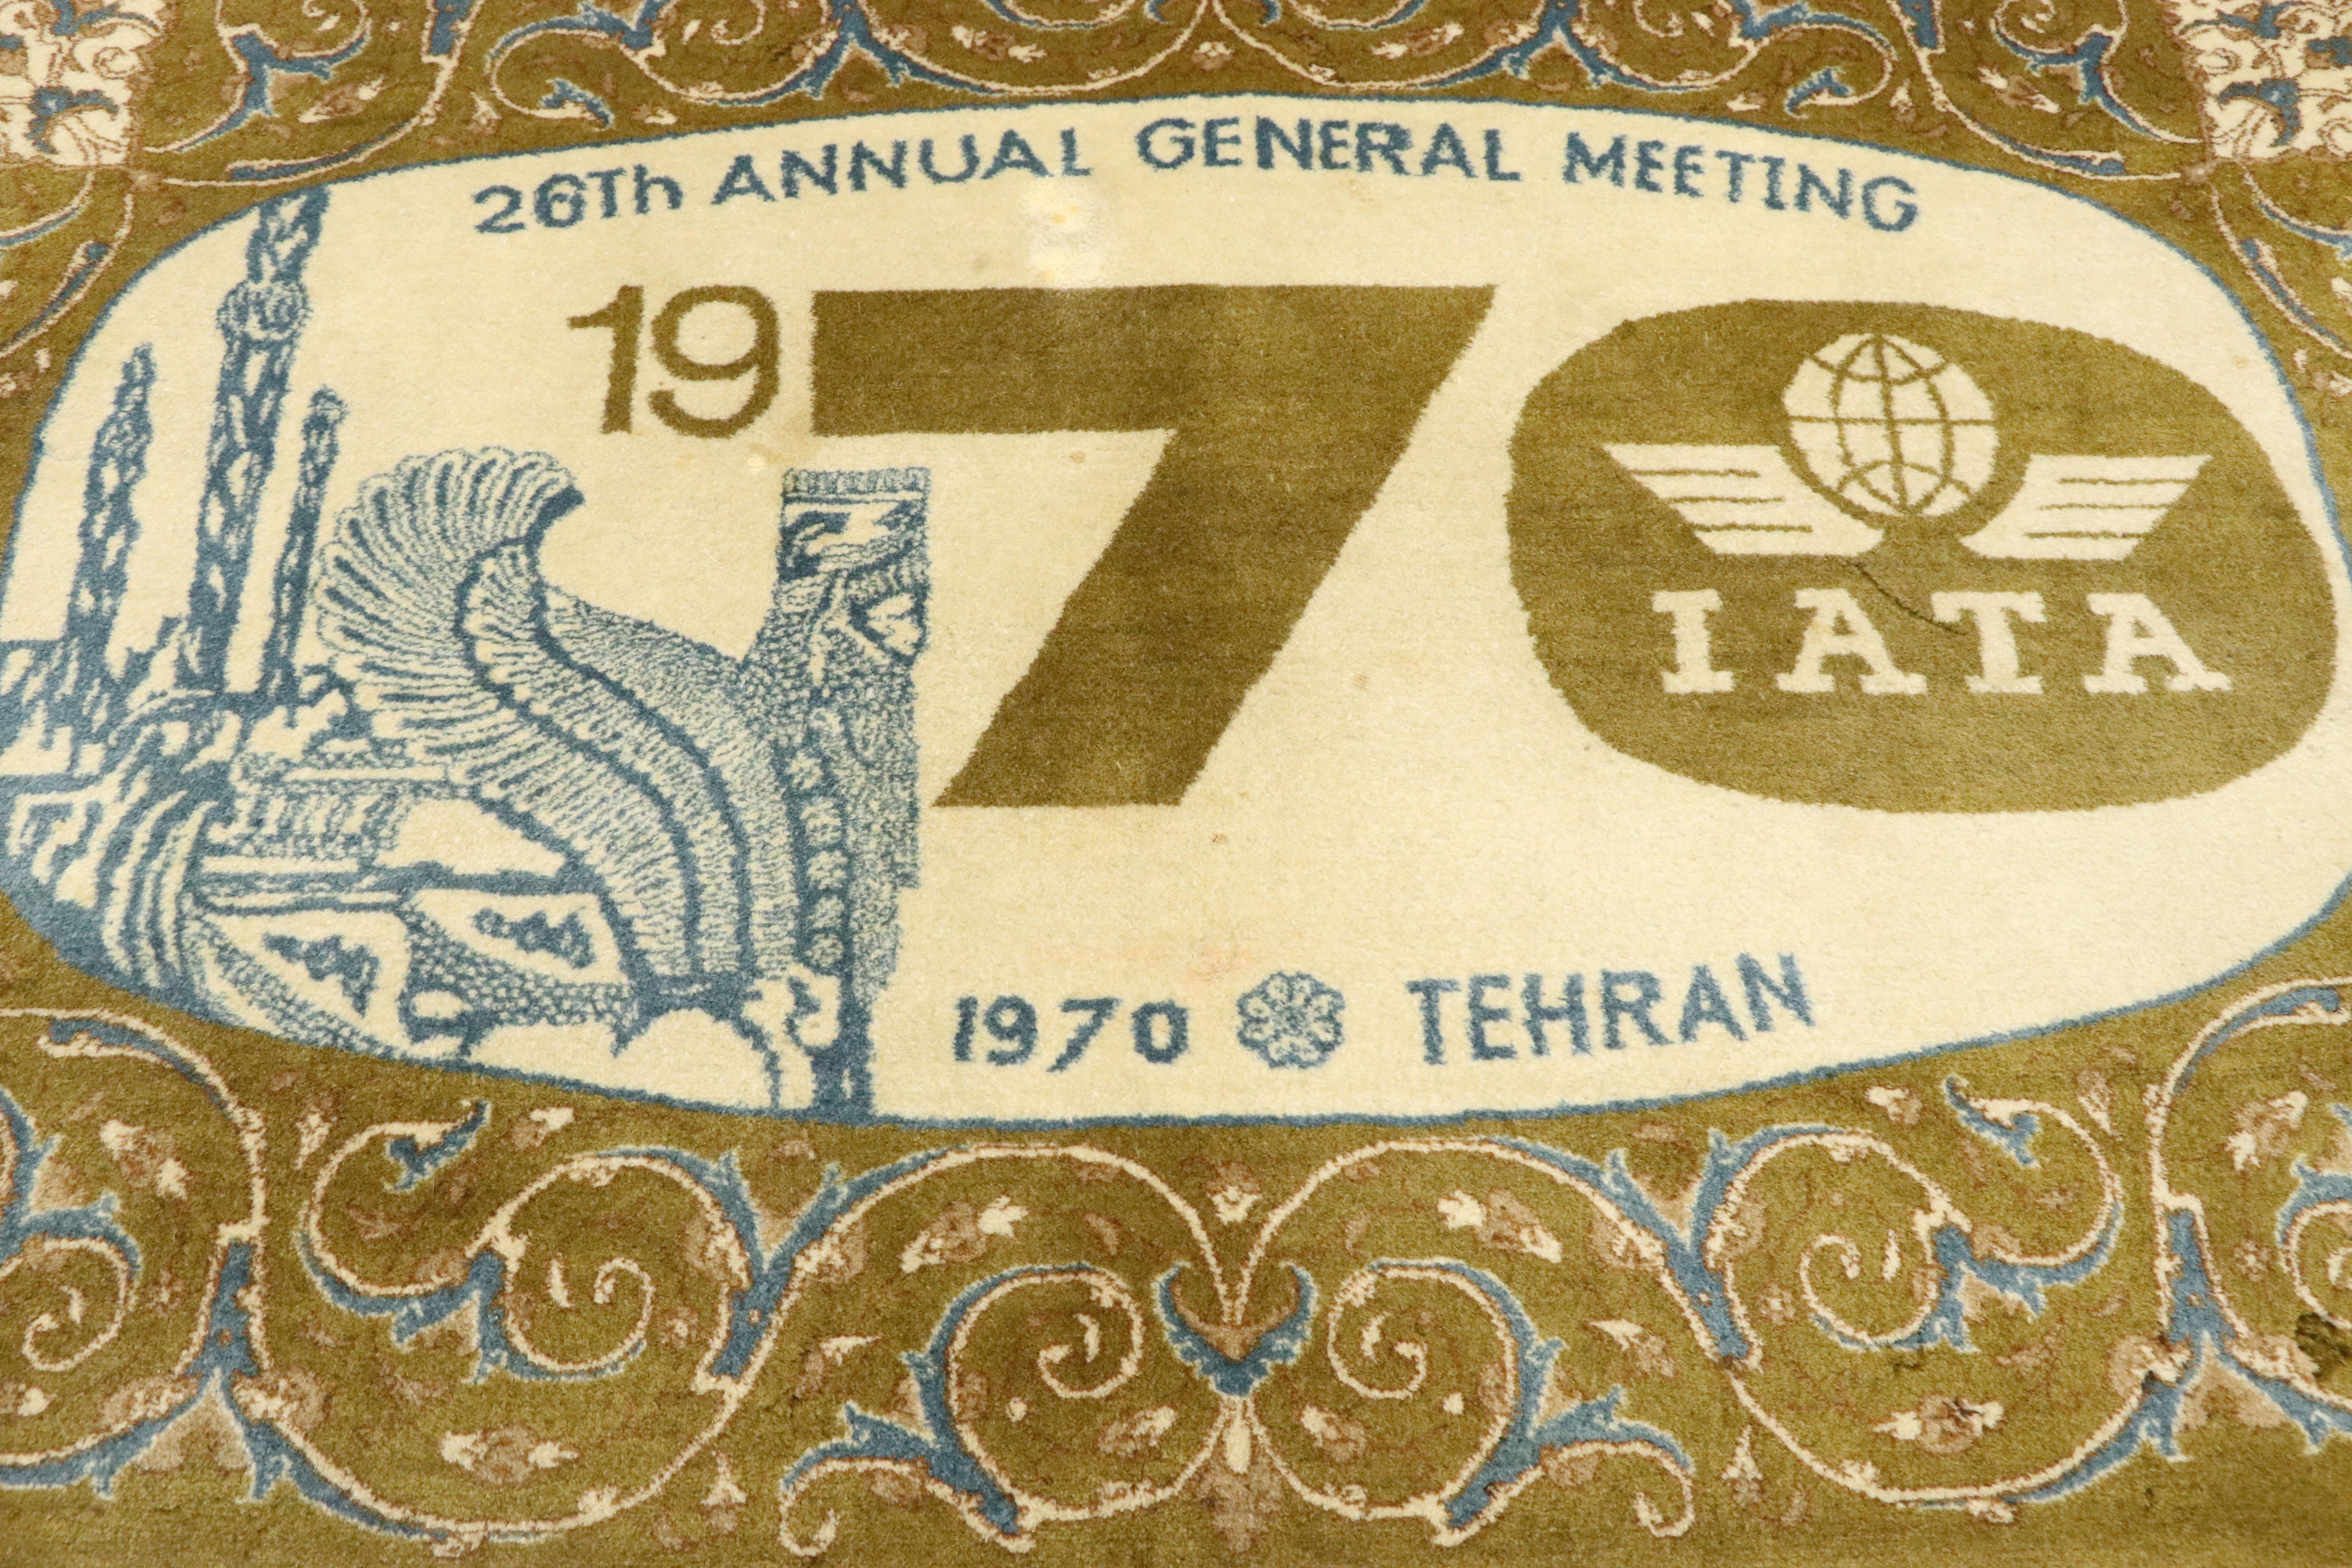 Vintage Persian Kashan Pictorial Rug with IATA, Kashan Wall Hanging Tapestry 3